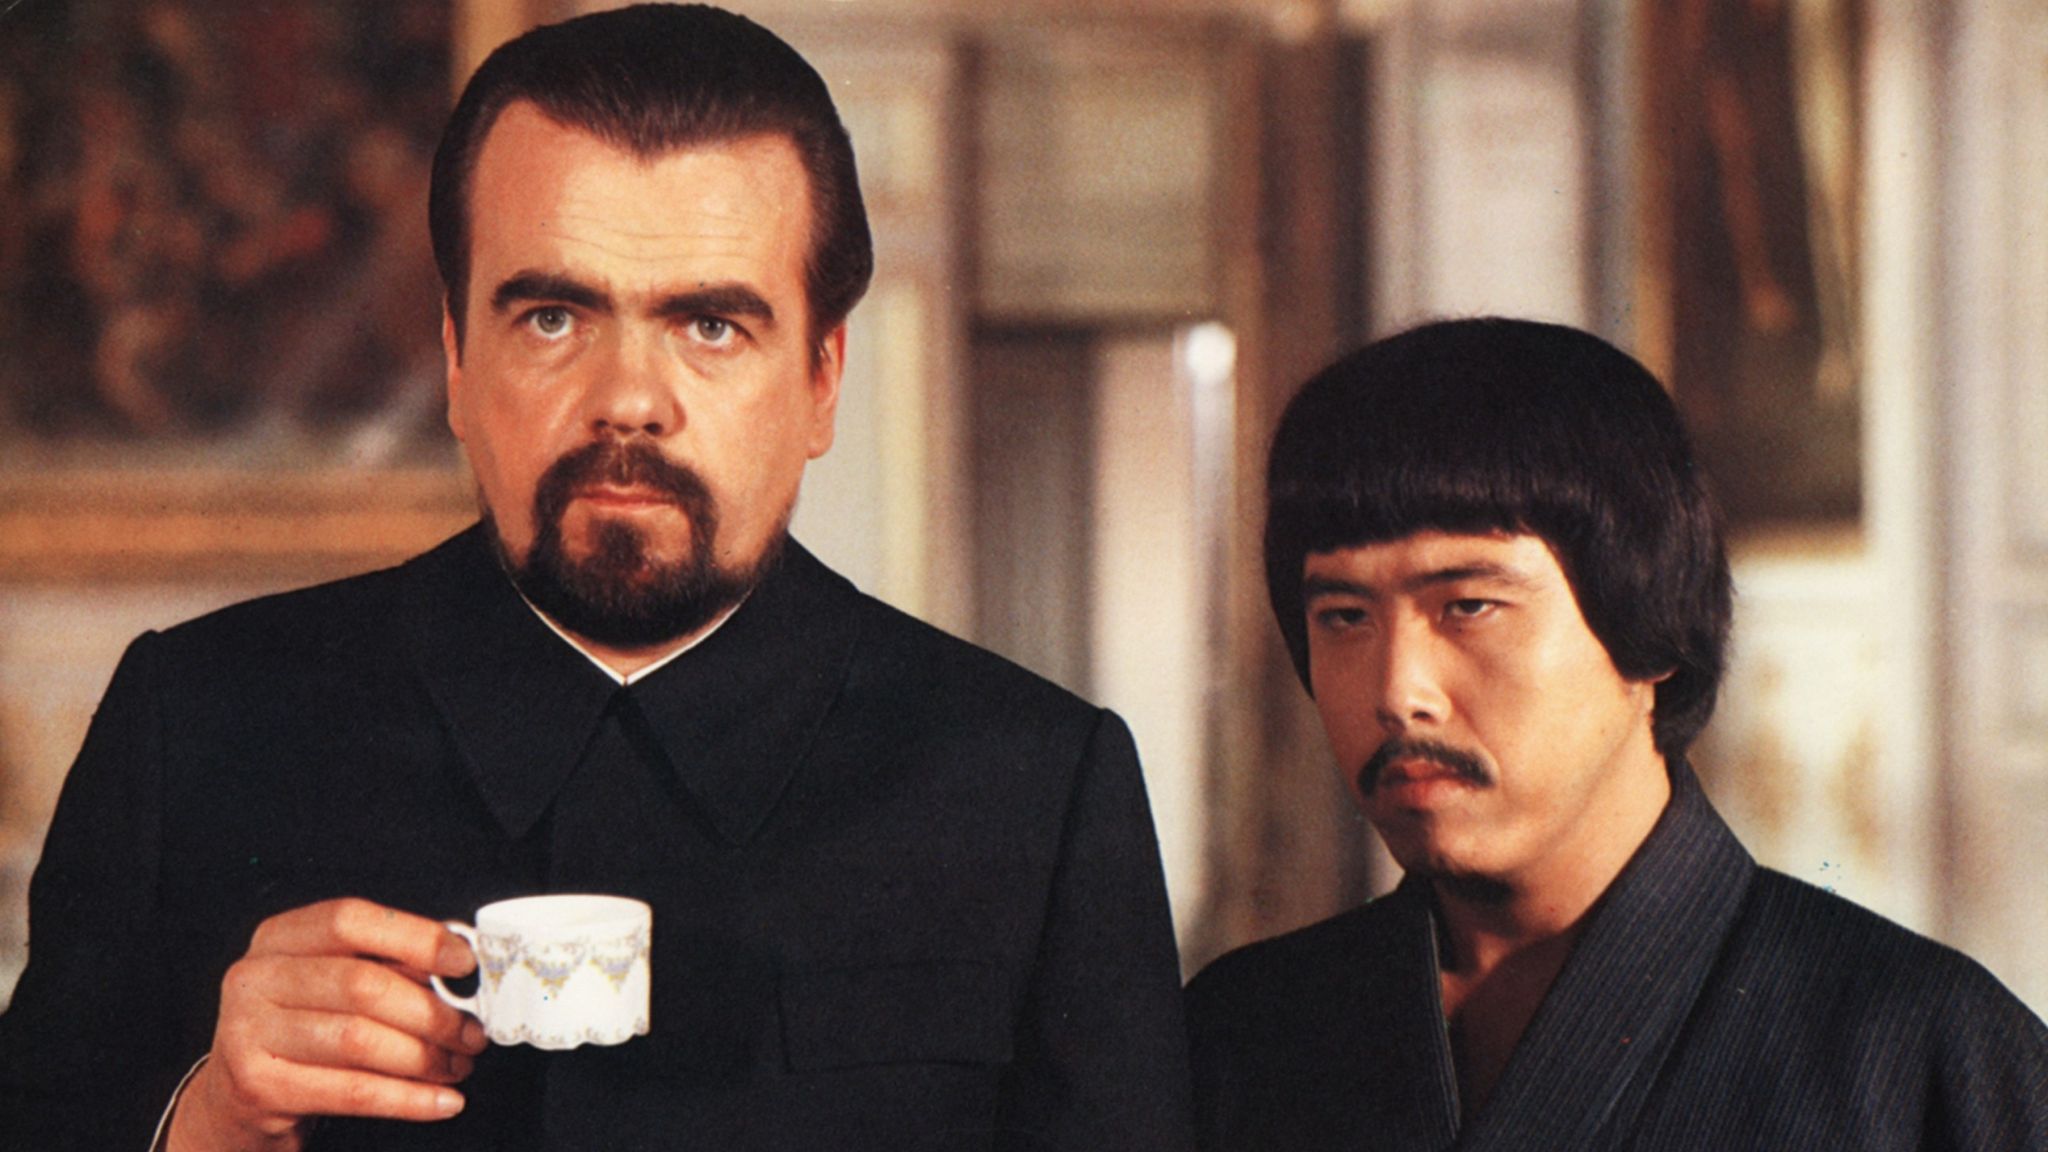 Hugo Drax and Chang in "Moonraker" (1979) 